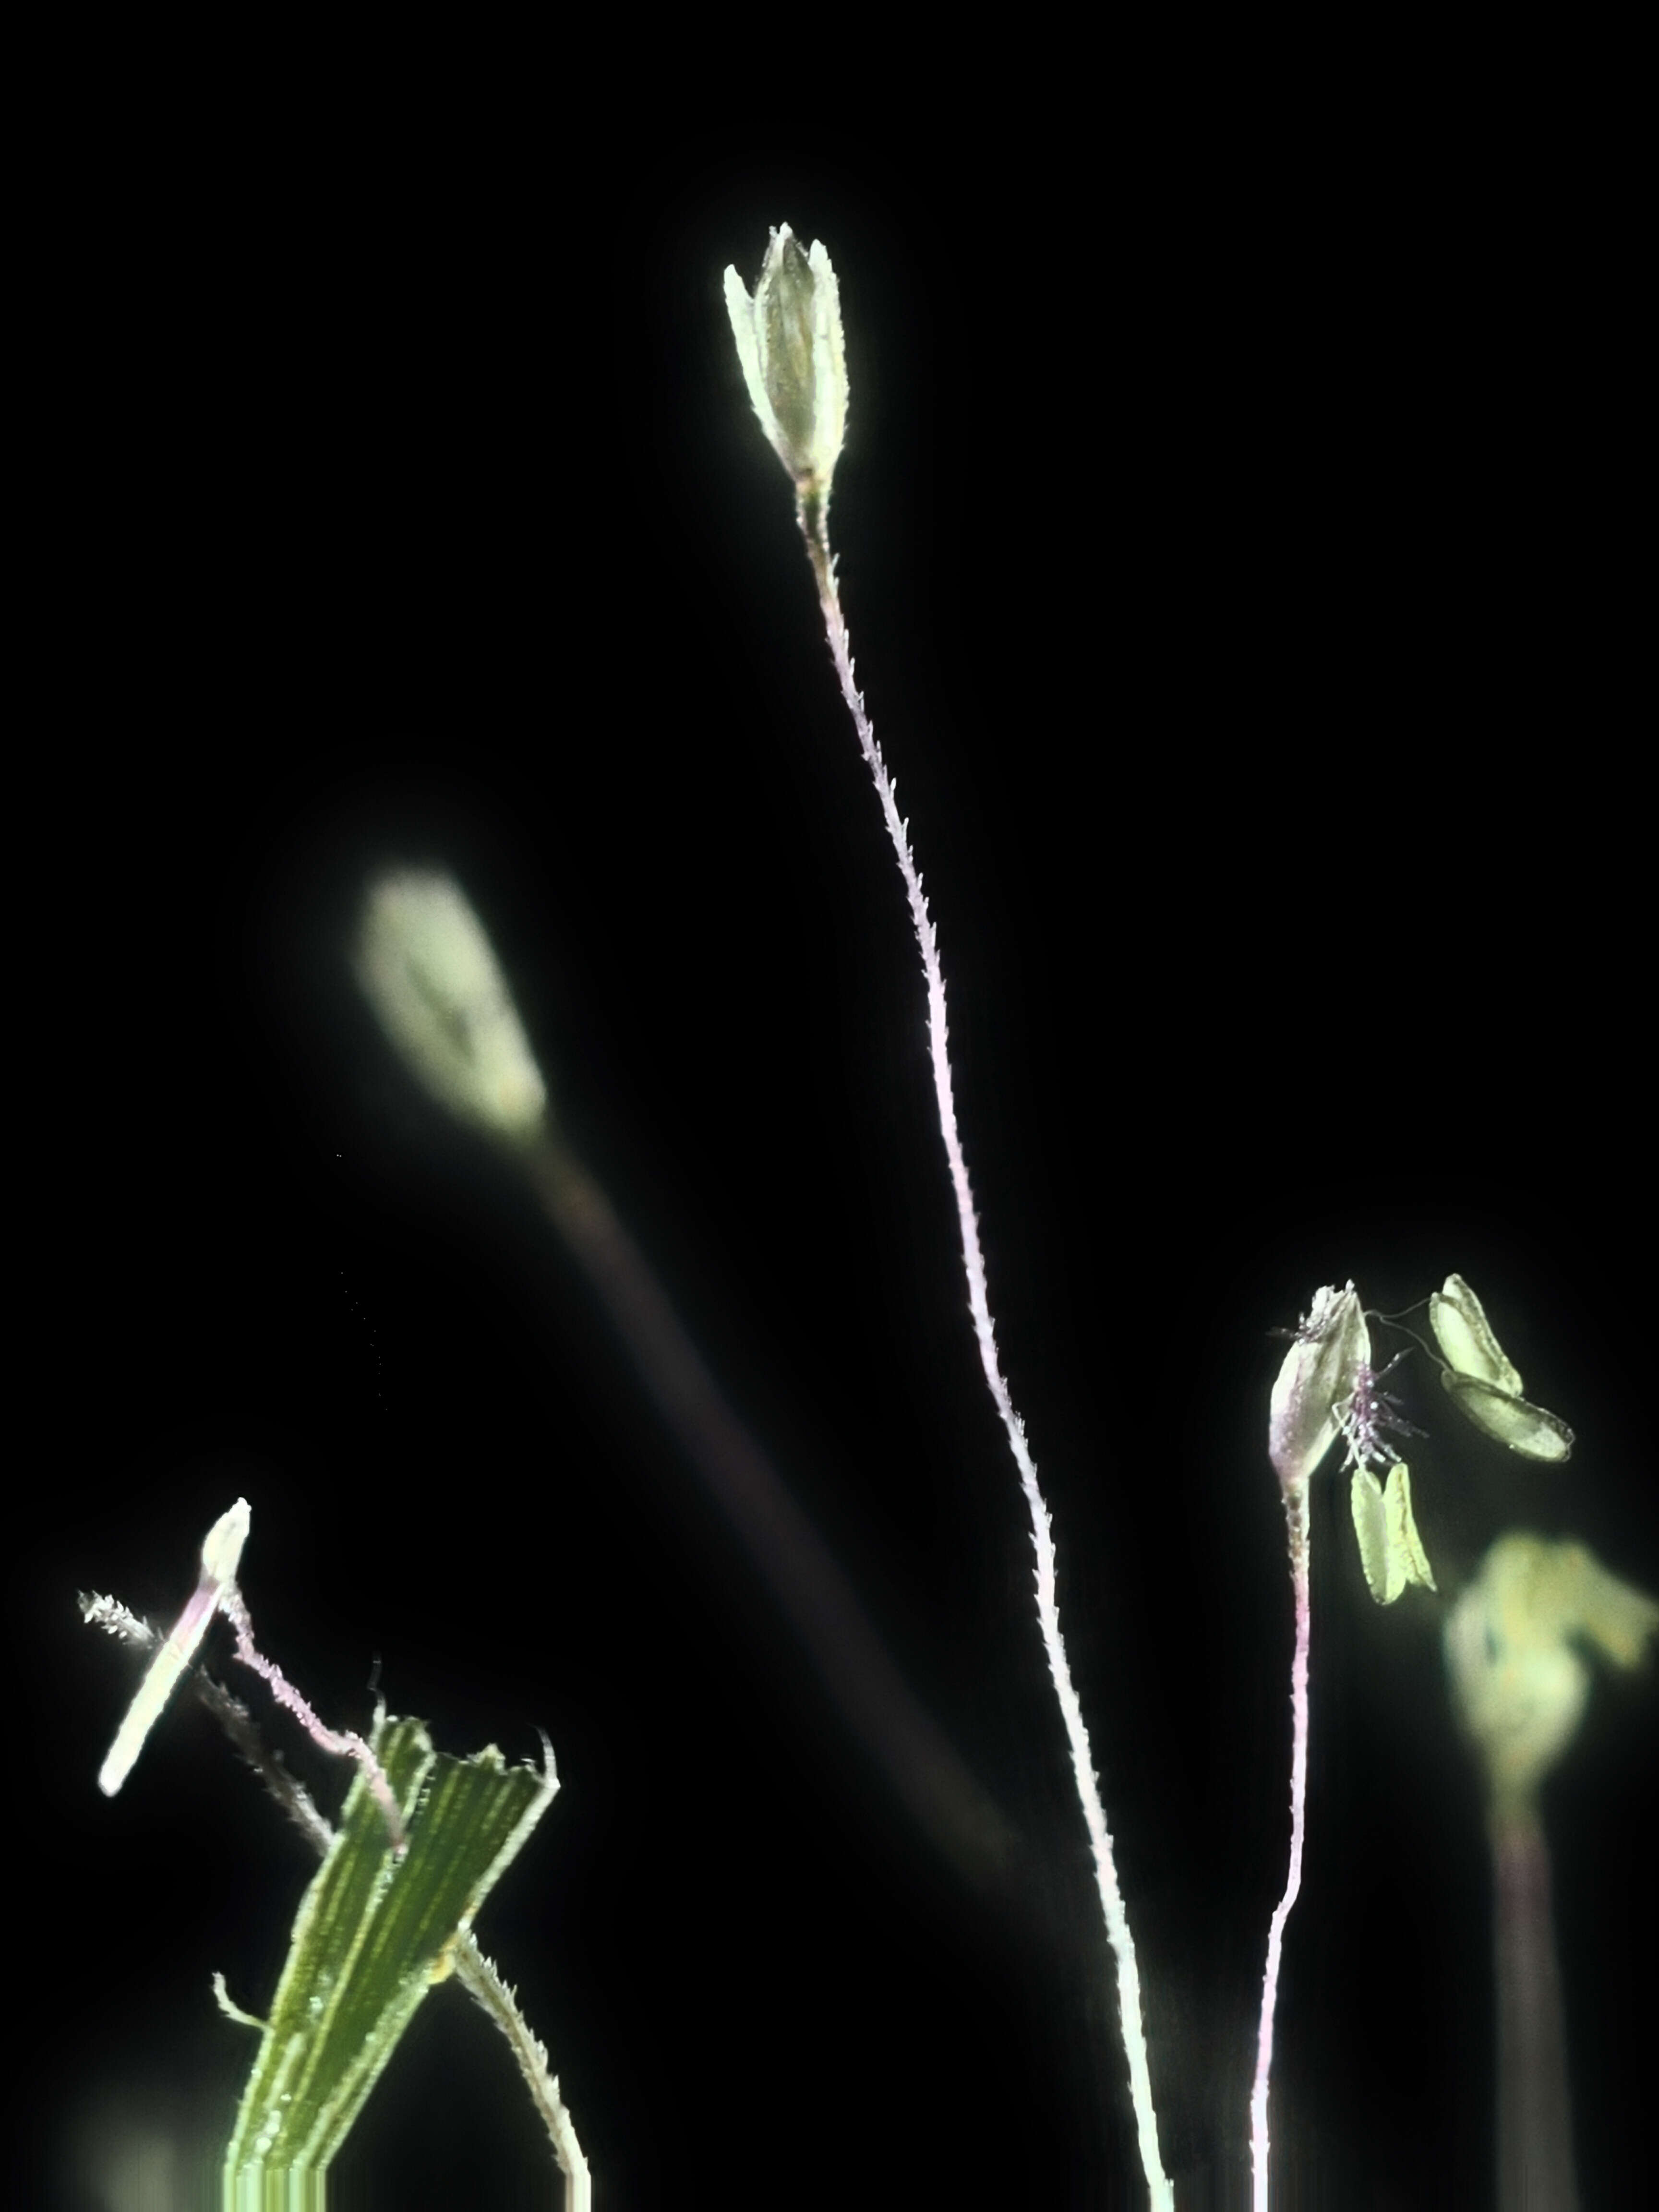 Image of scratchgrass